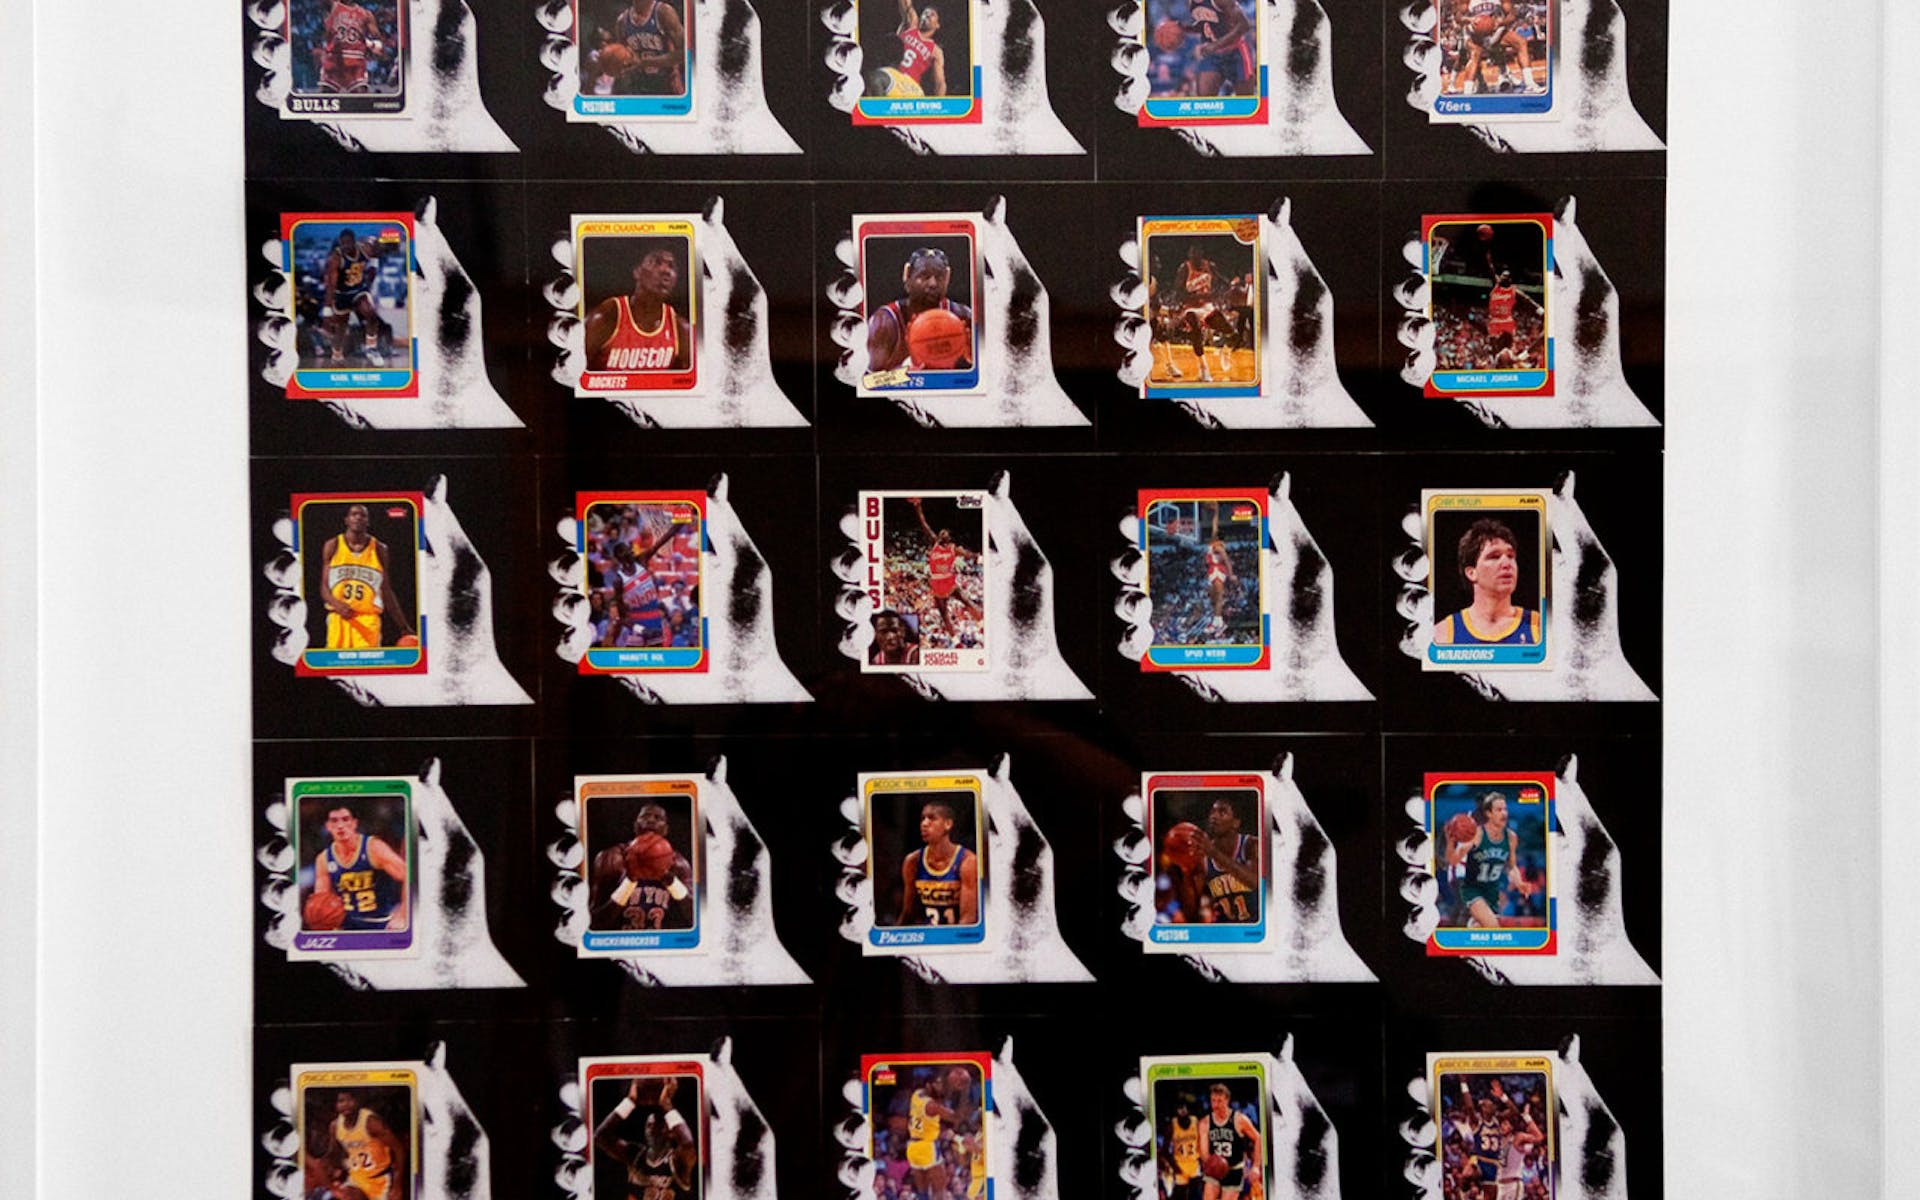 Framed artwork consisting of a grid of images of hands holding cassette tapes